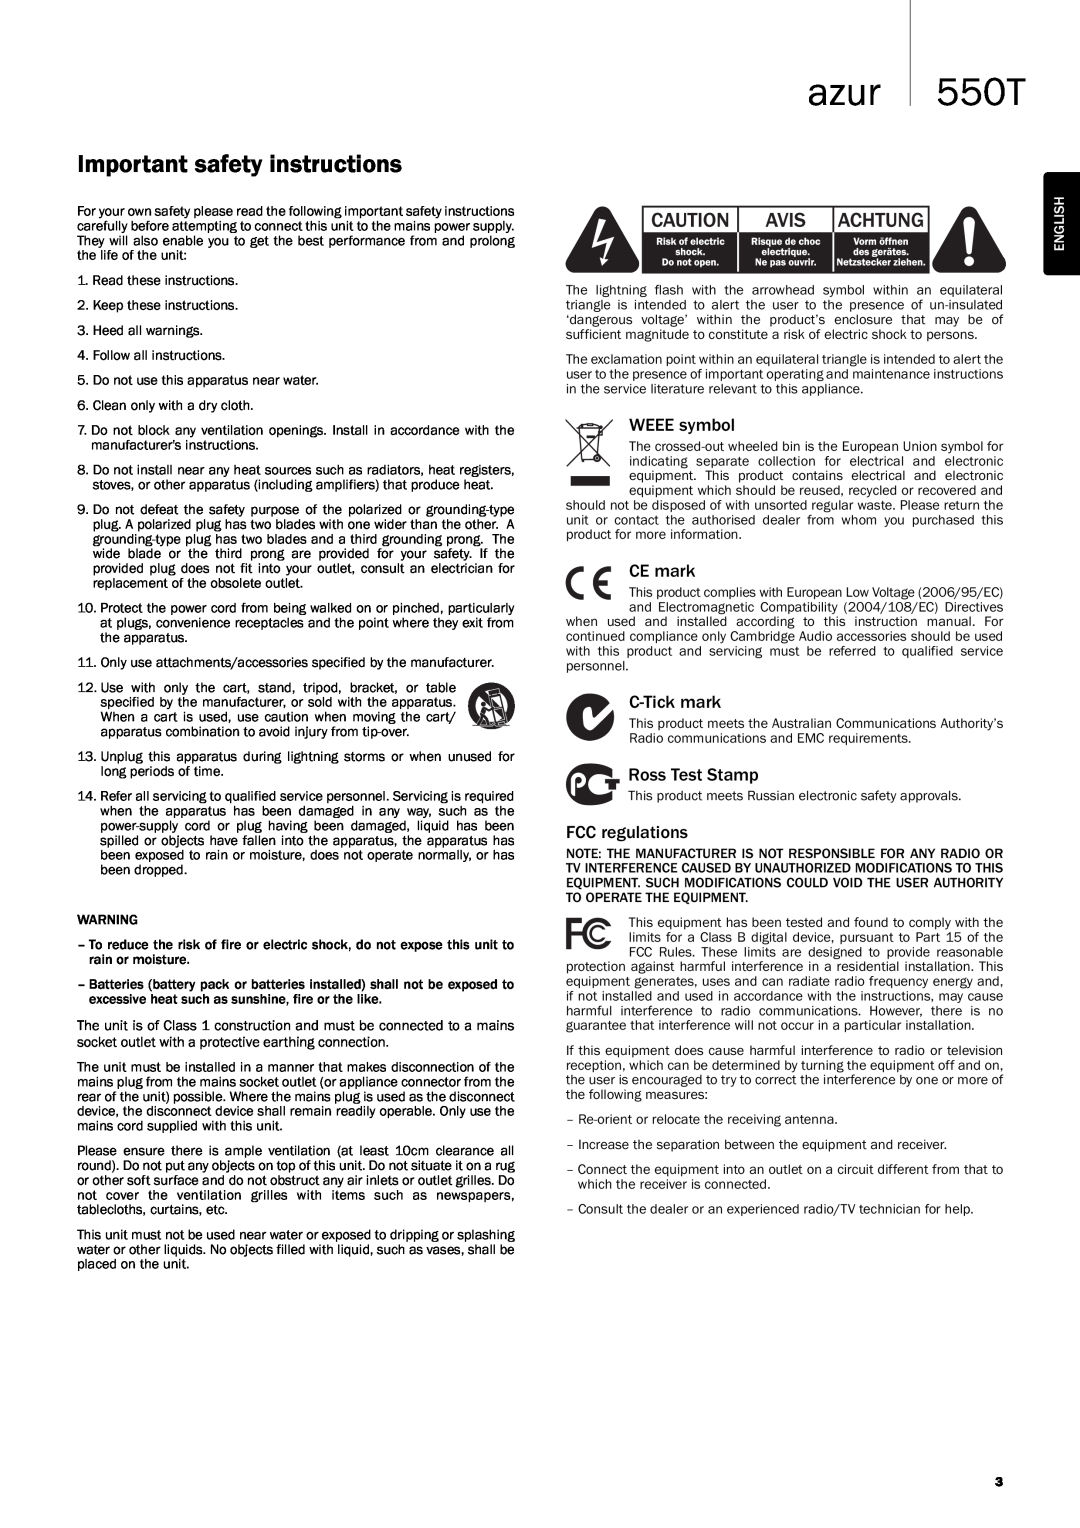 Cambridge Audio user manual azur 550T, Important safety instructions, English 